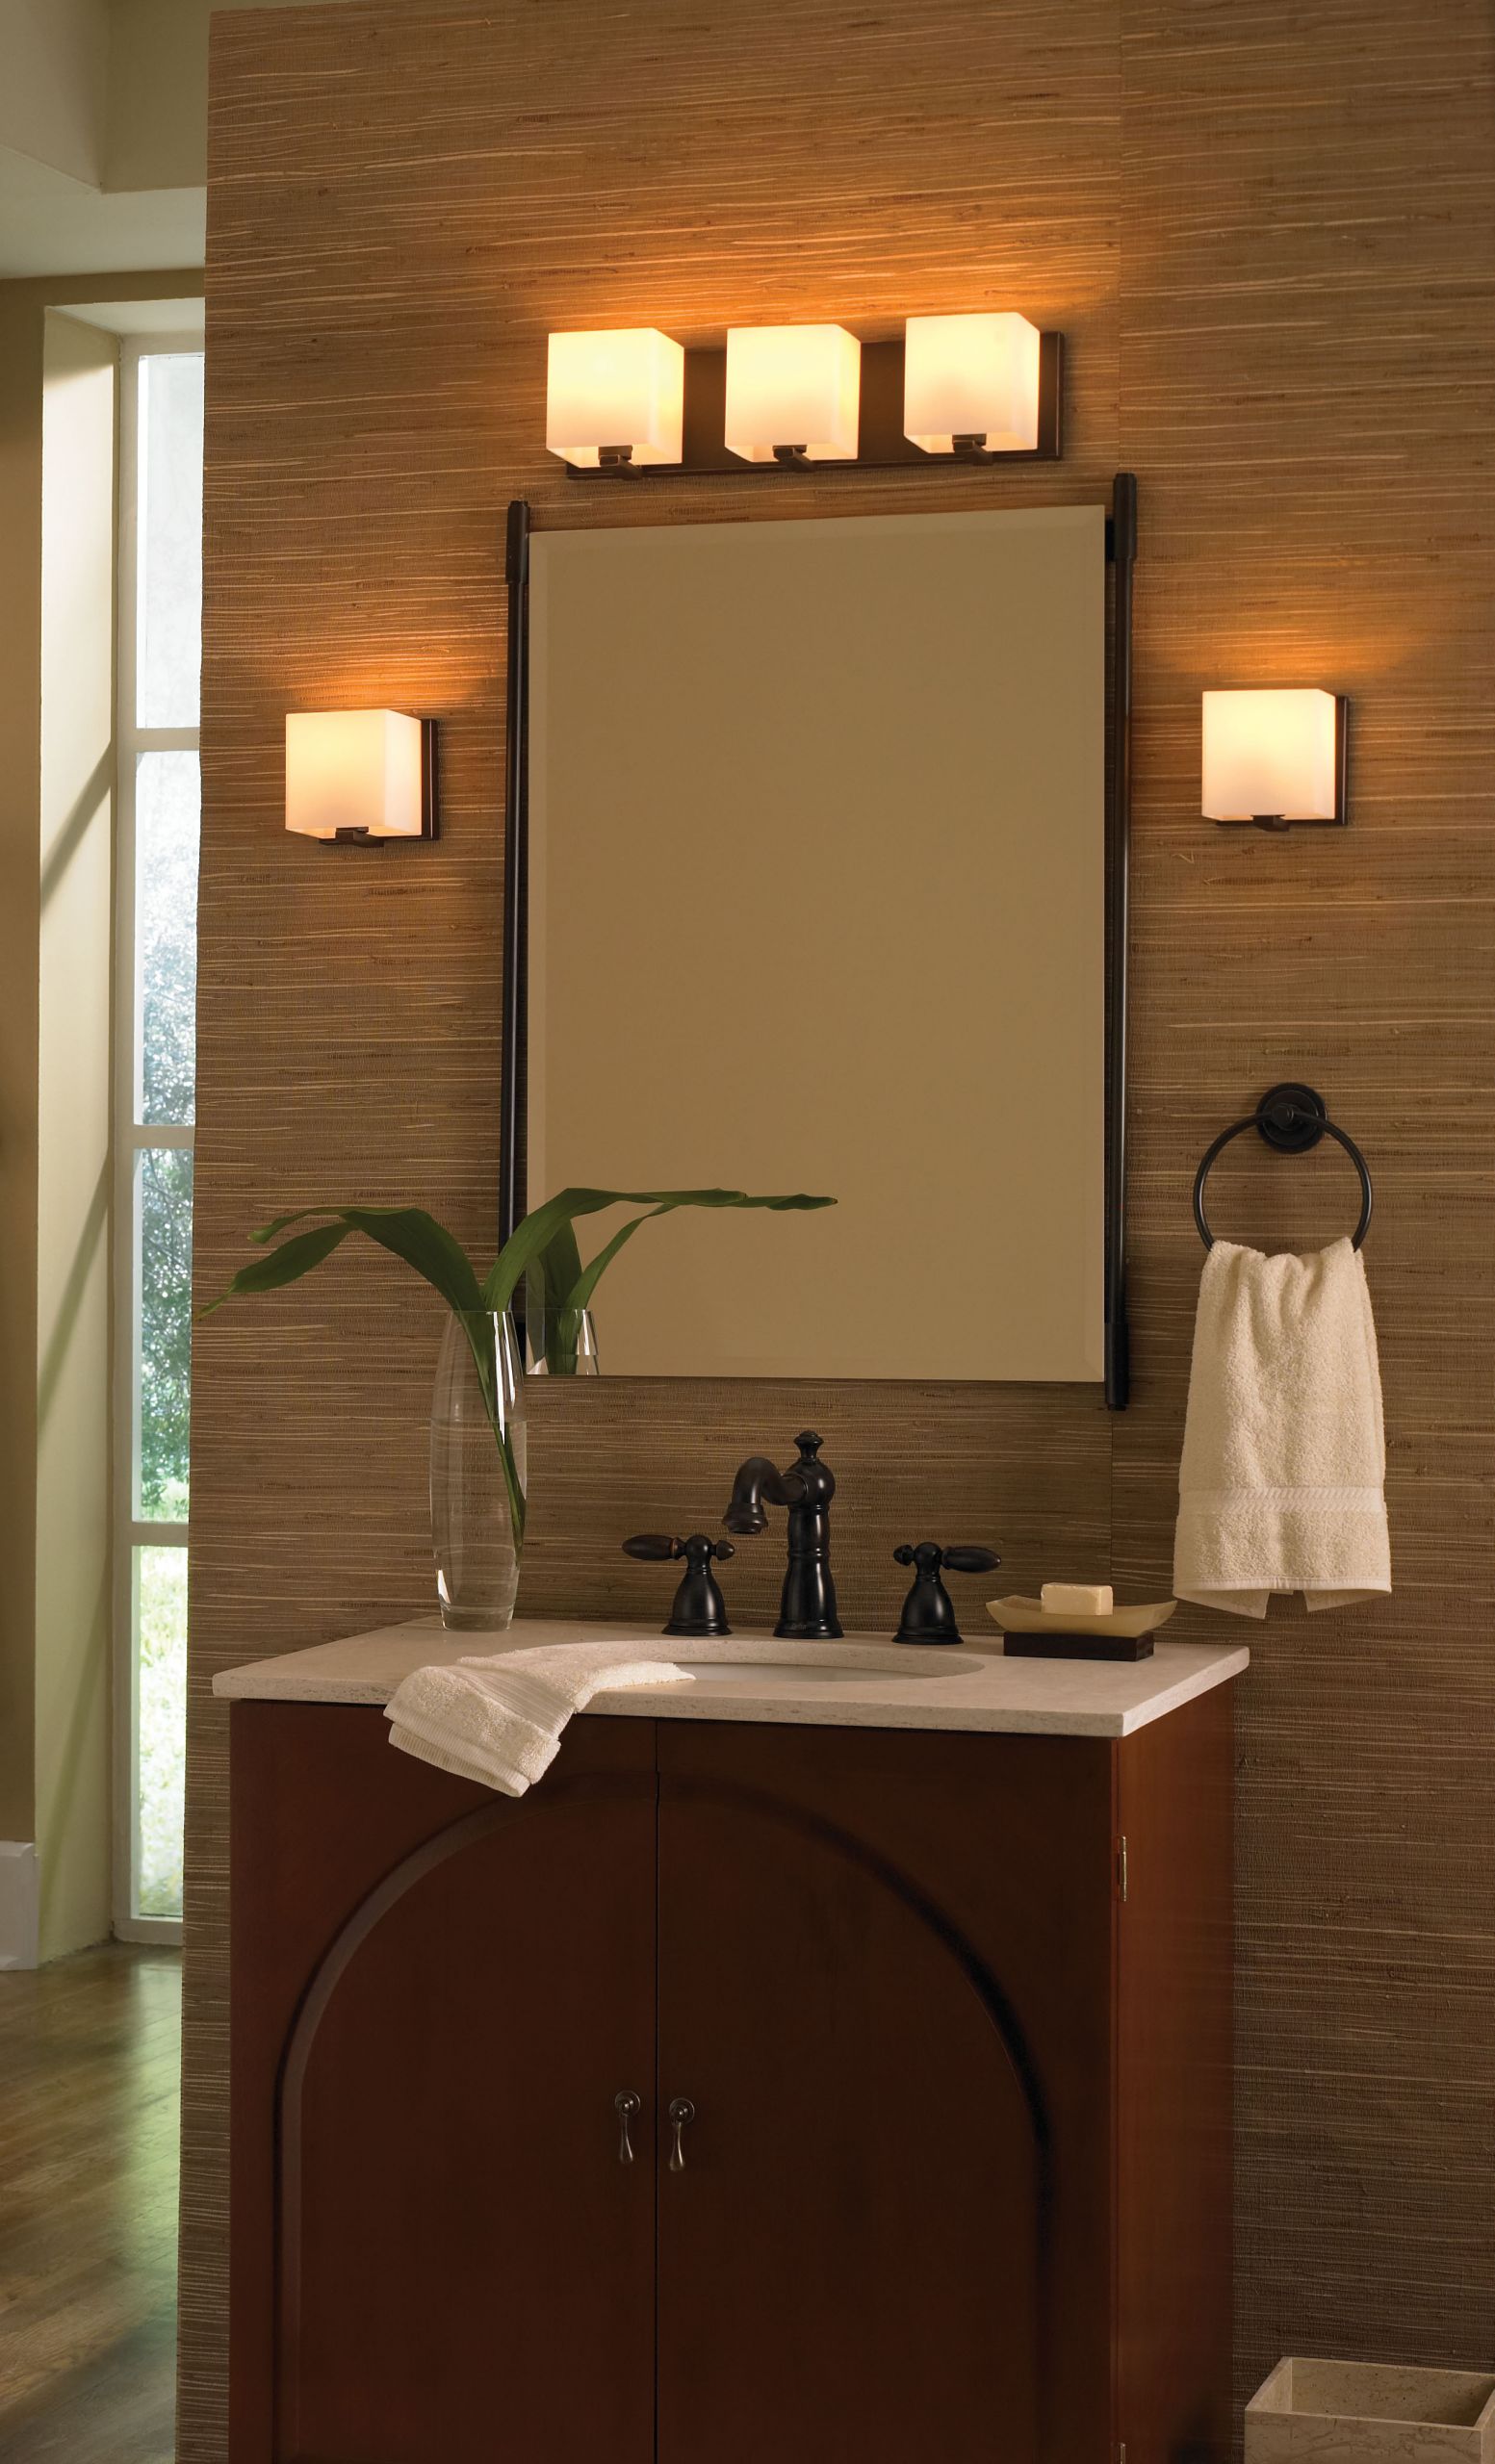 Lighting Fixtures Bathroom
 Lumens Highlights Favorites for Modern Bath Lighting